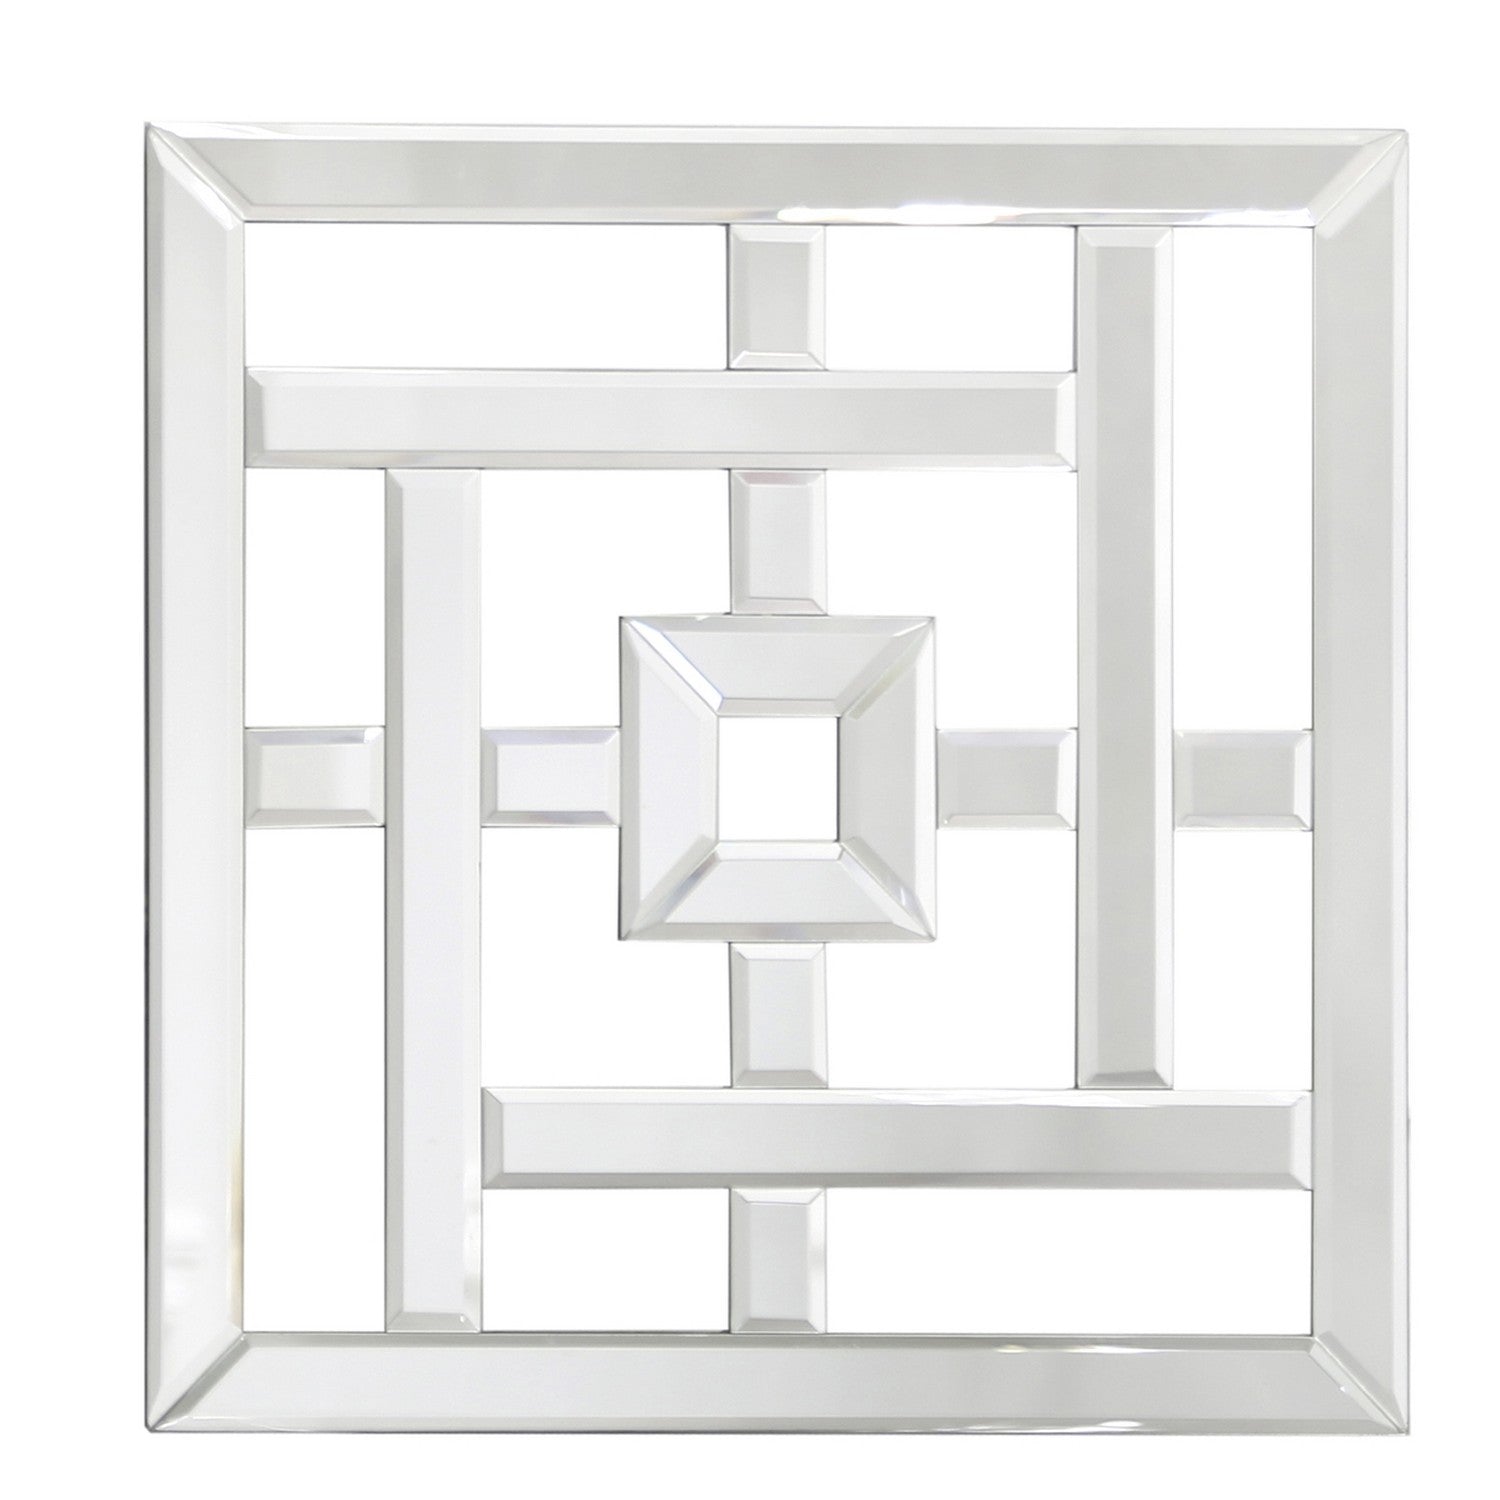 Value 40cm Geometric Mirror Wall Art